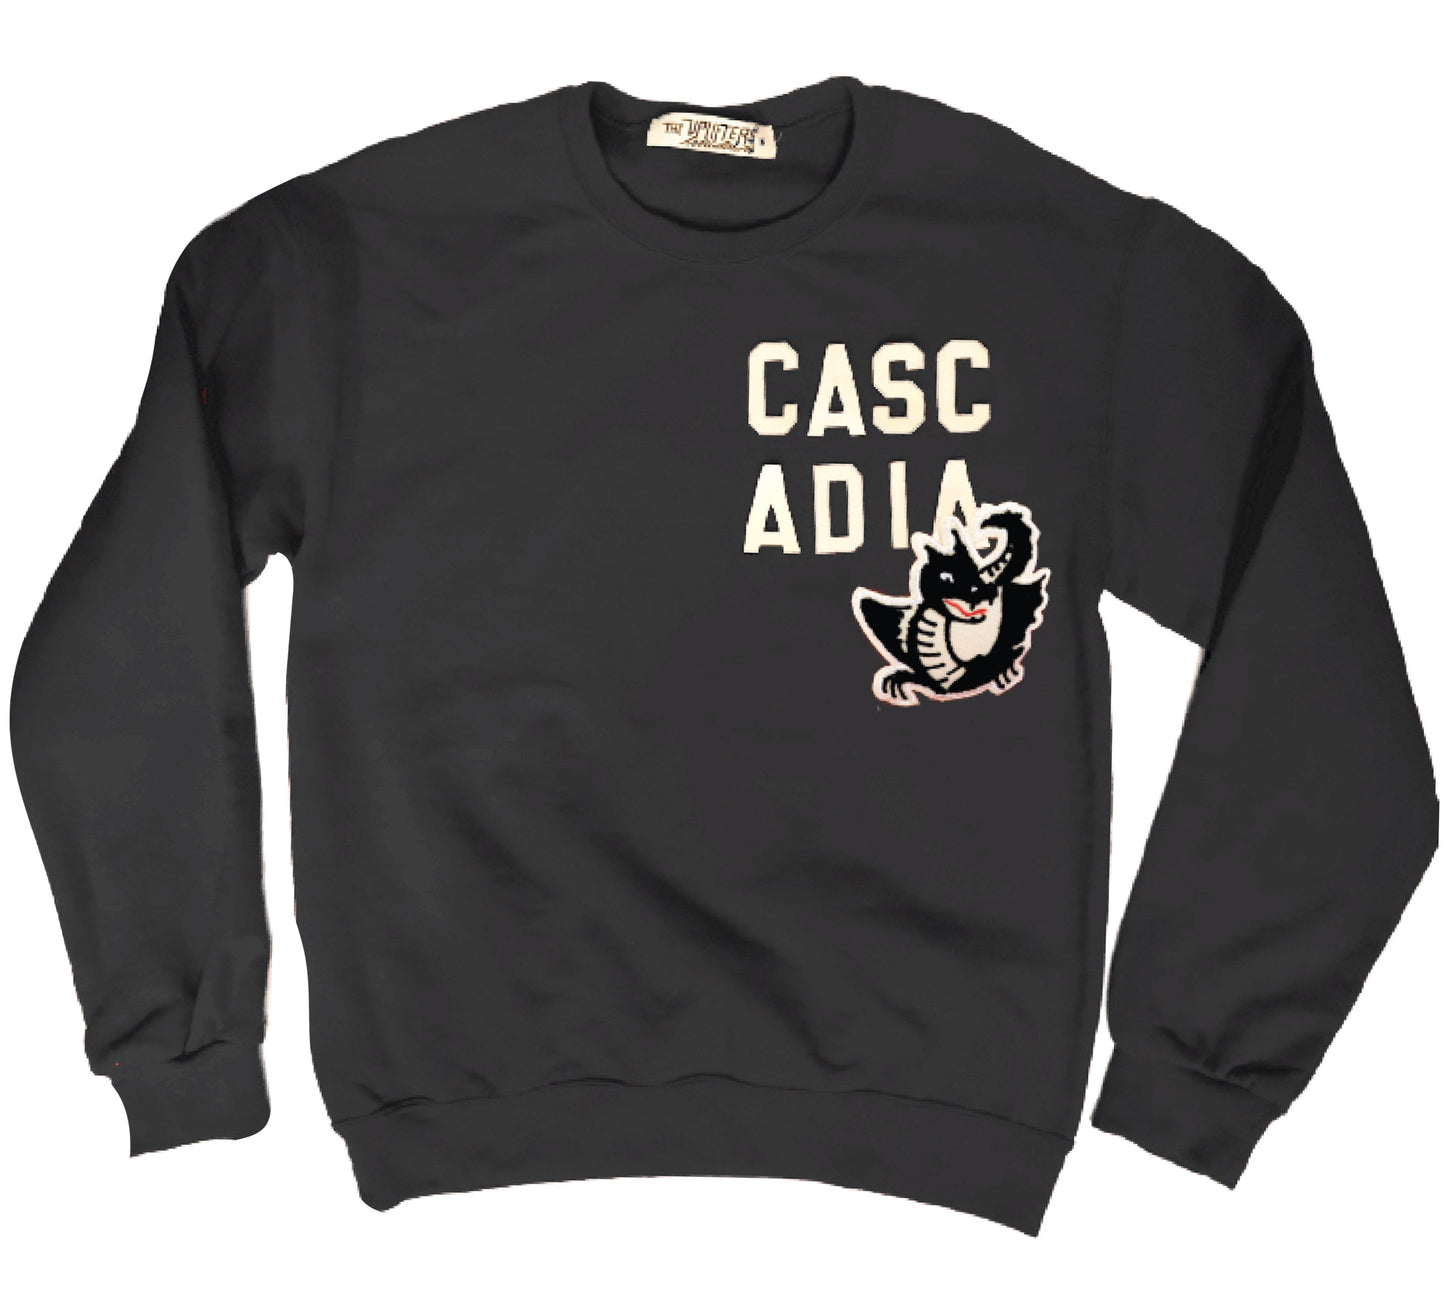 Cascadia Adult Vintaged Pullover Sweatshirt in Black